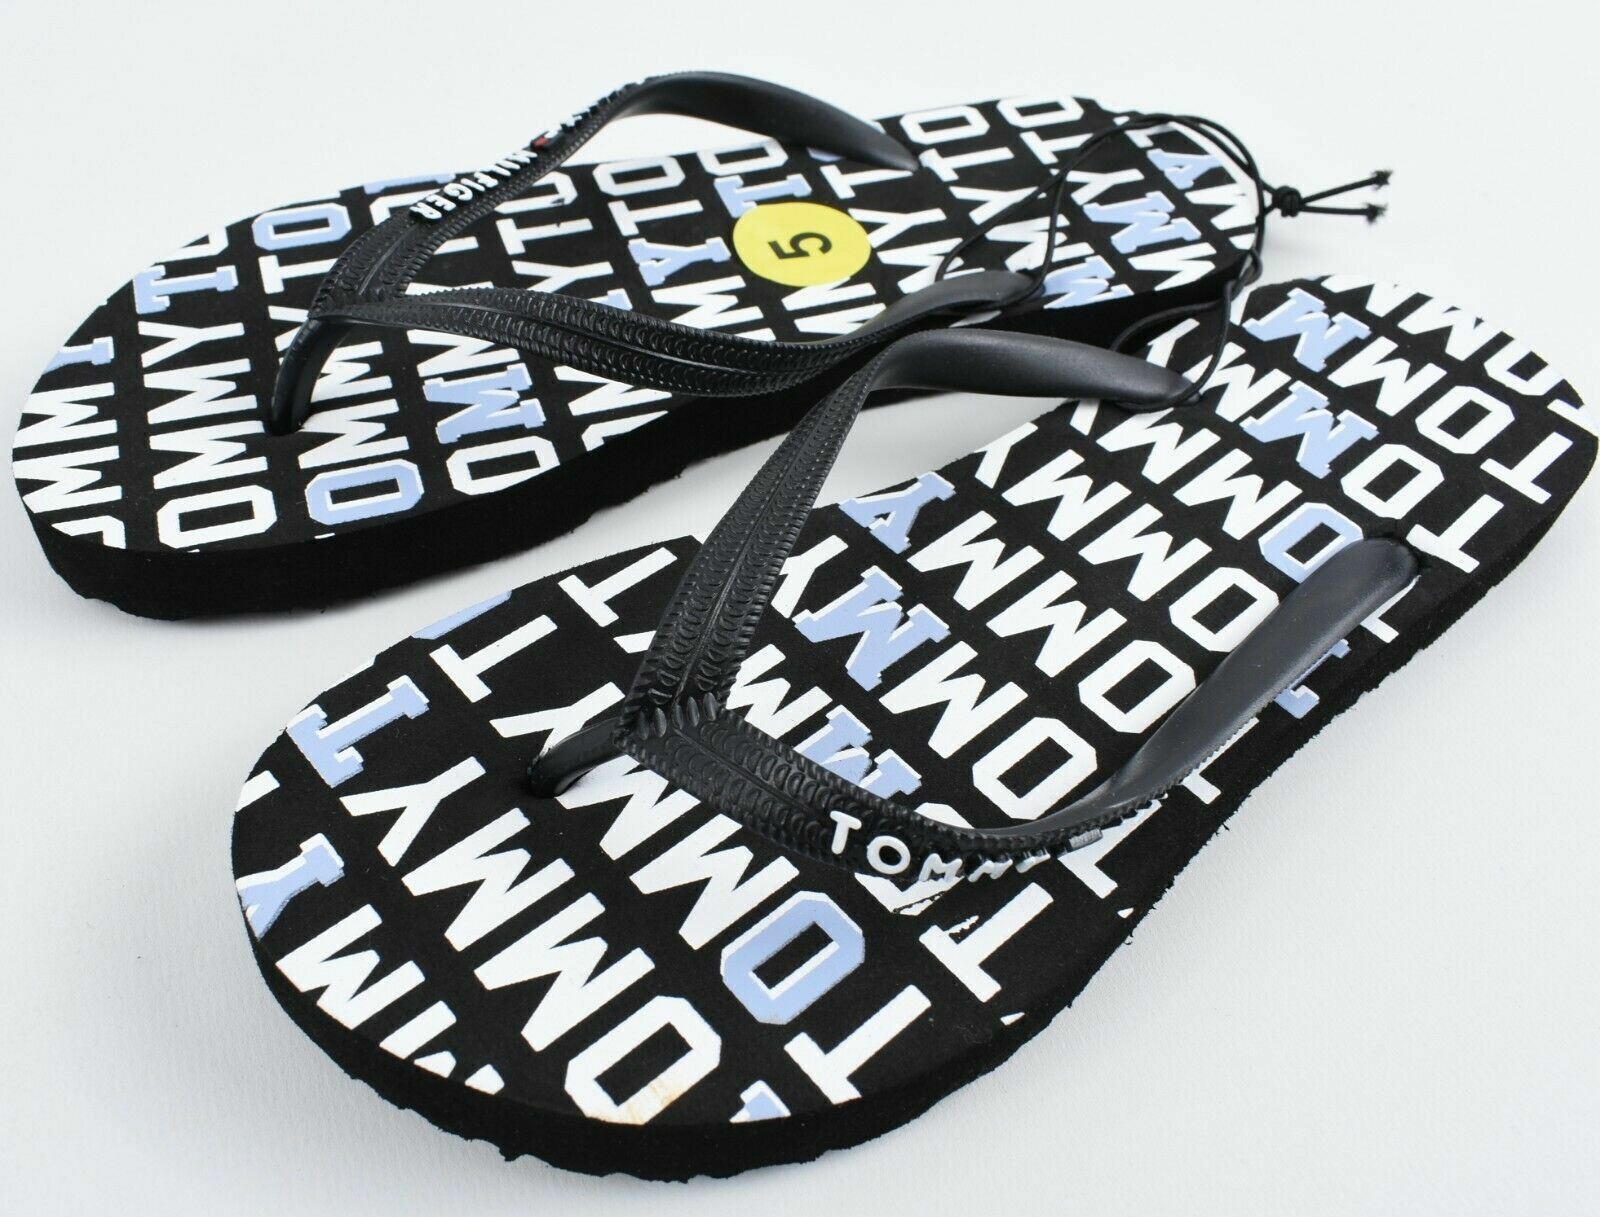 TOMMY HILFIGER Women's DANE-R Flip Flops Sandals, Black/White, size UK 2.5